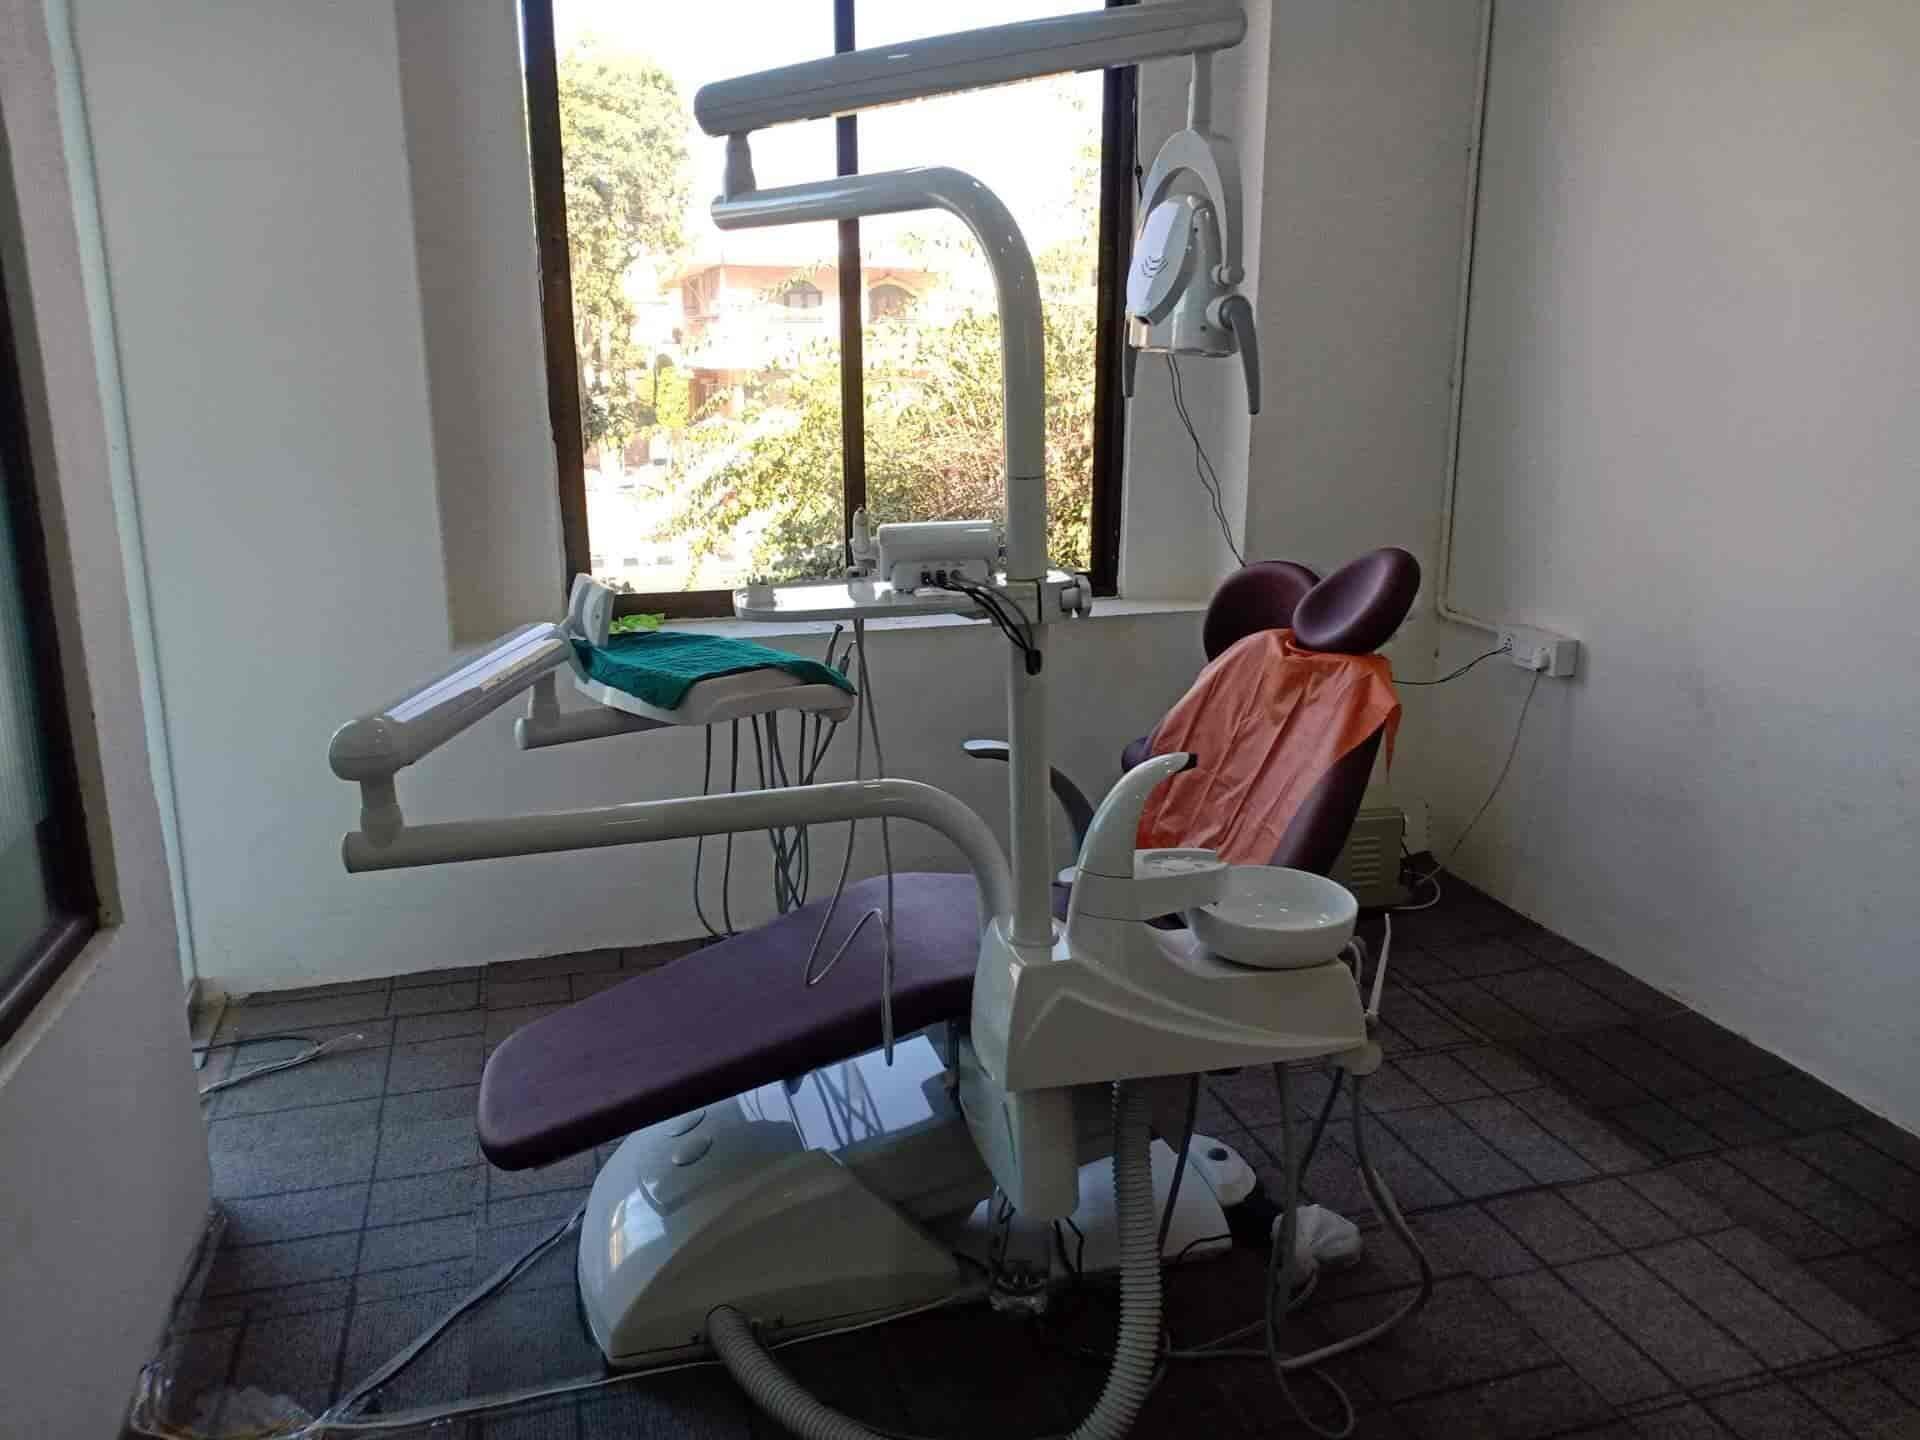 Vatsalya dental hospital and advance implant